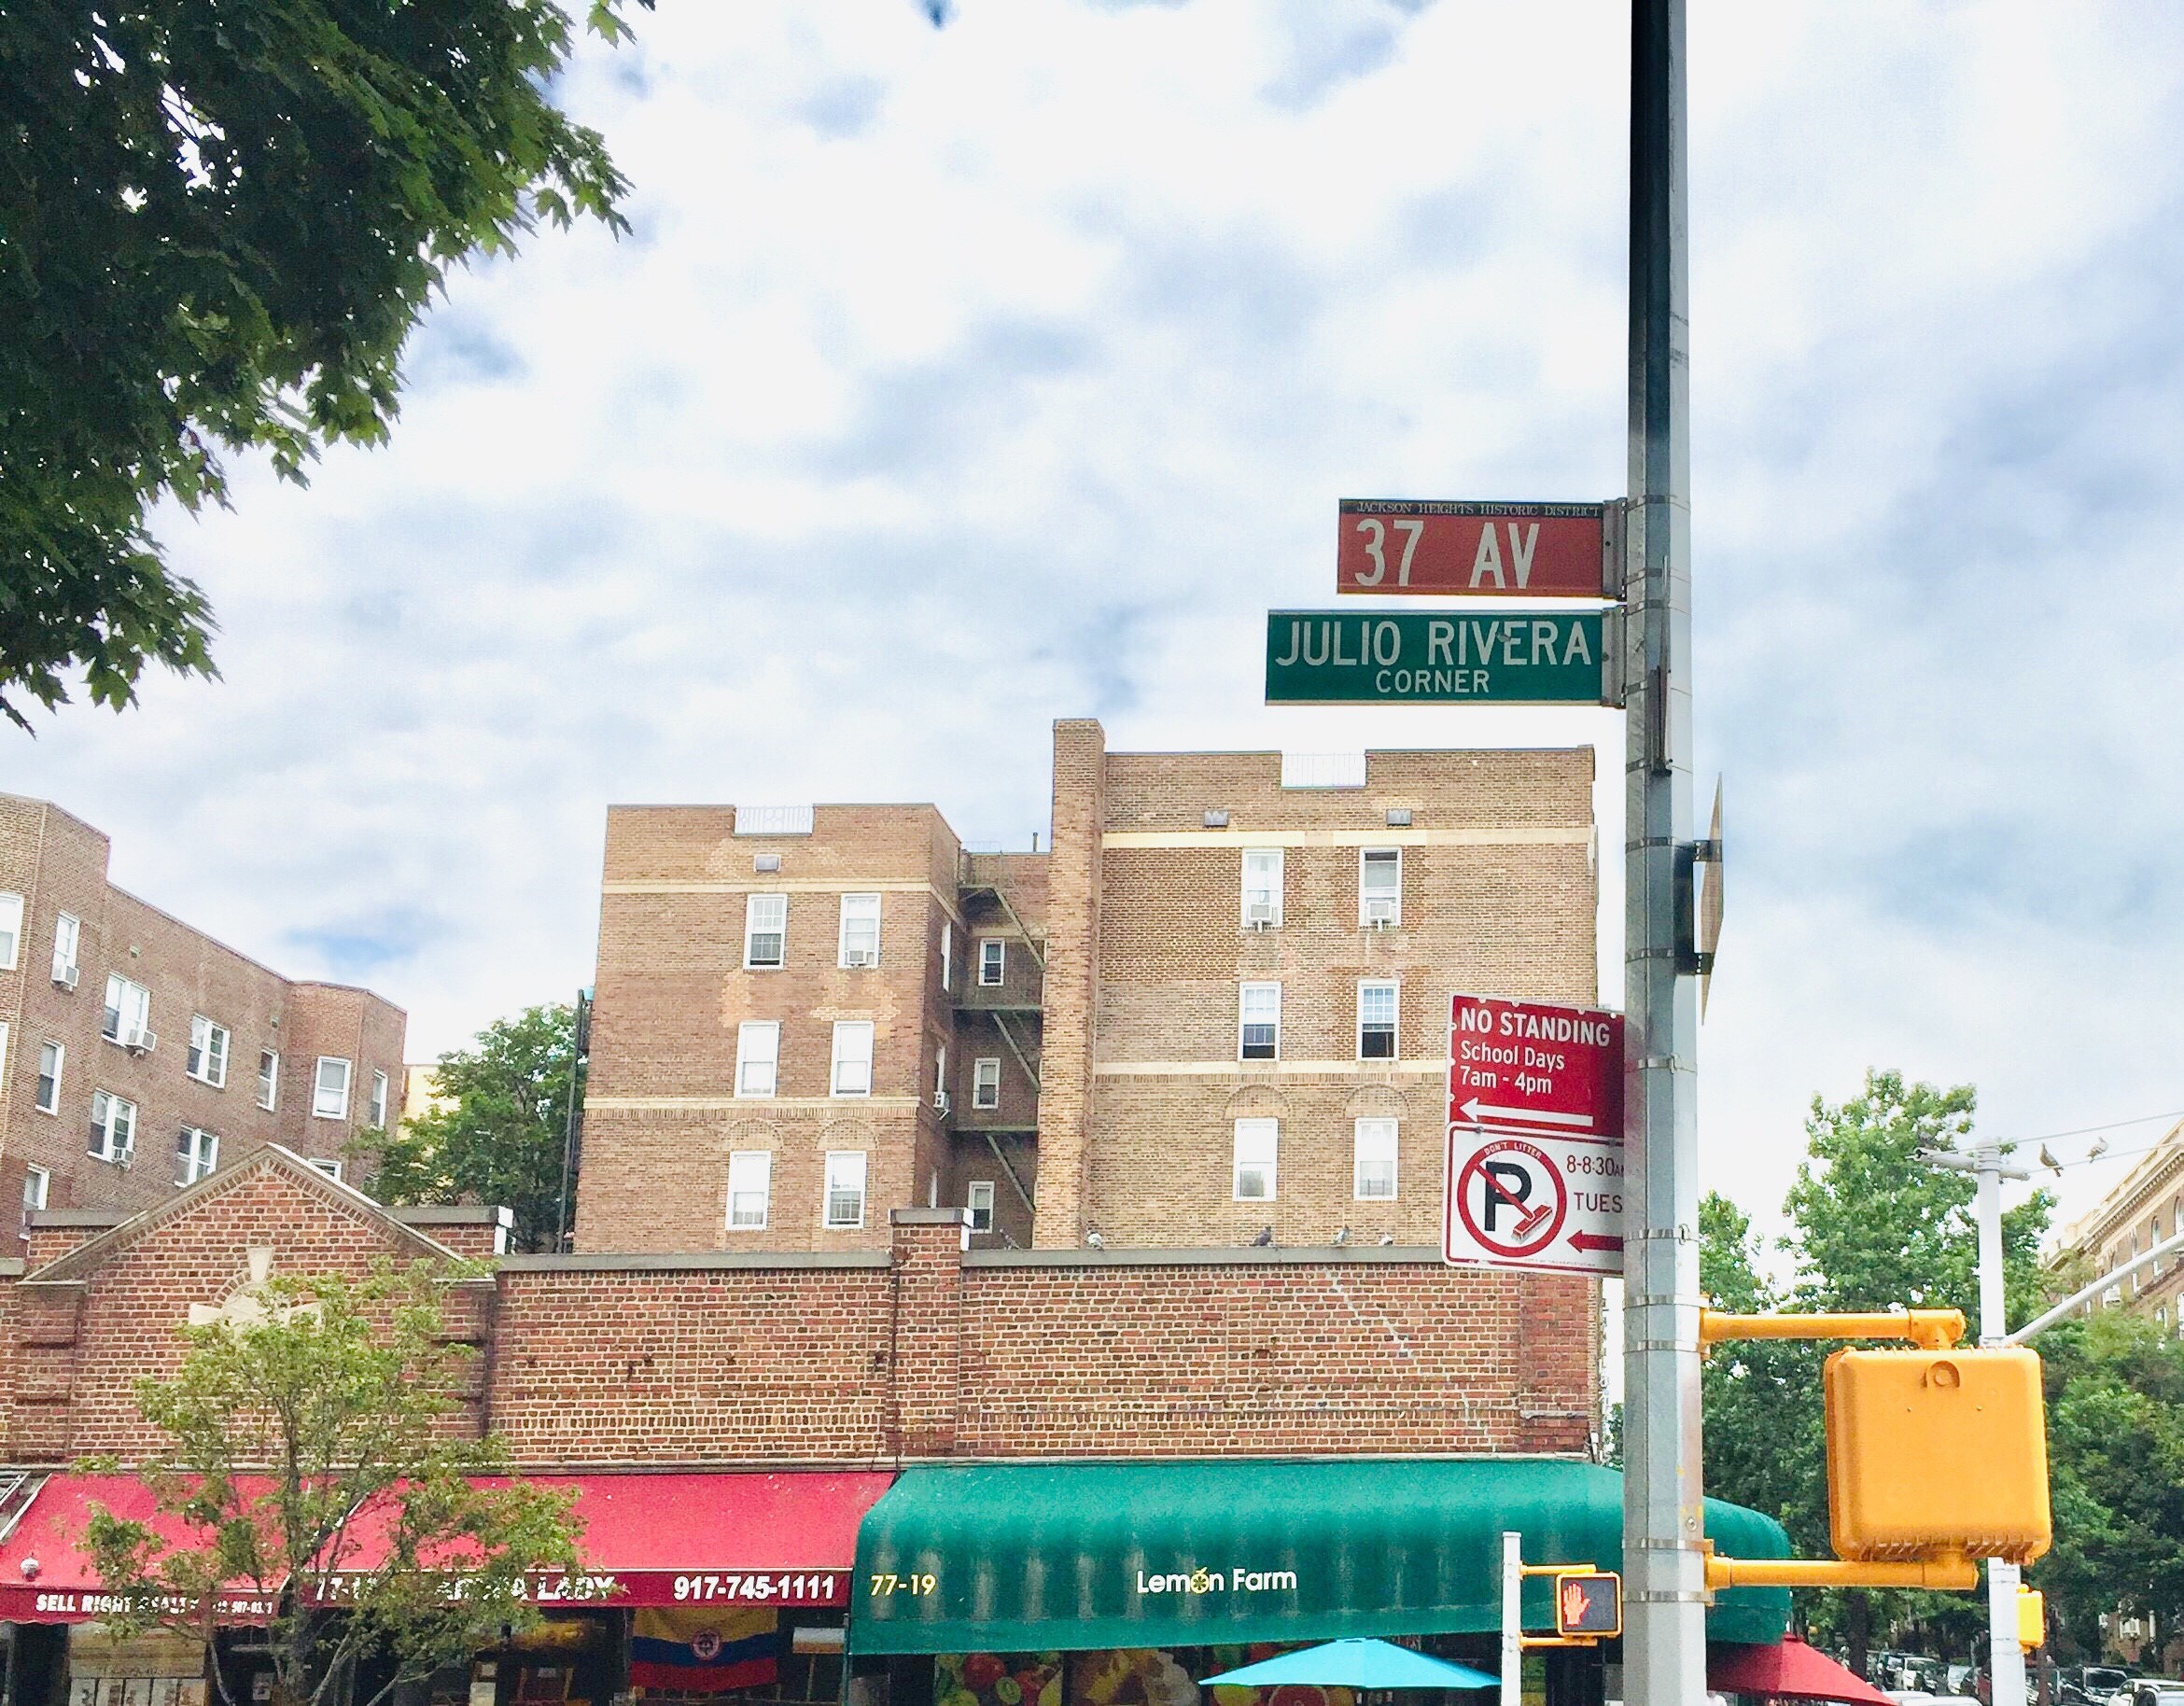 Street sign in Jackson Heights, Queens, NYC, honoring Julio Rivera: Julio Rivera corner